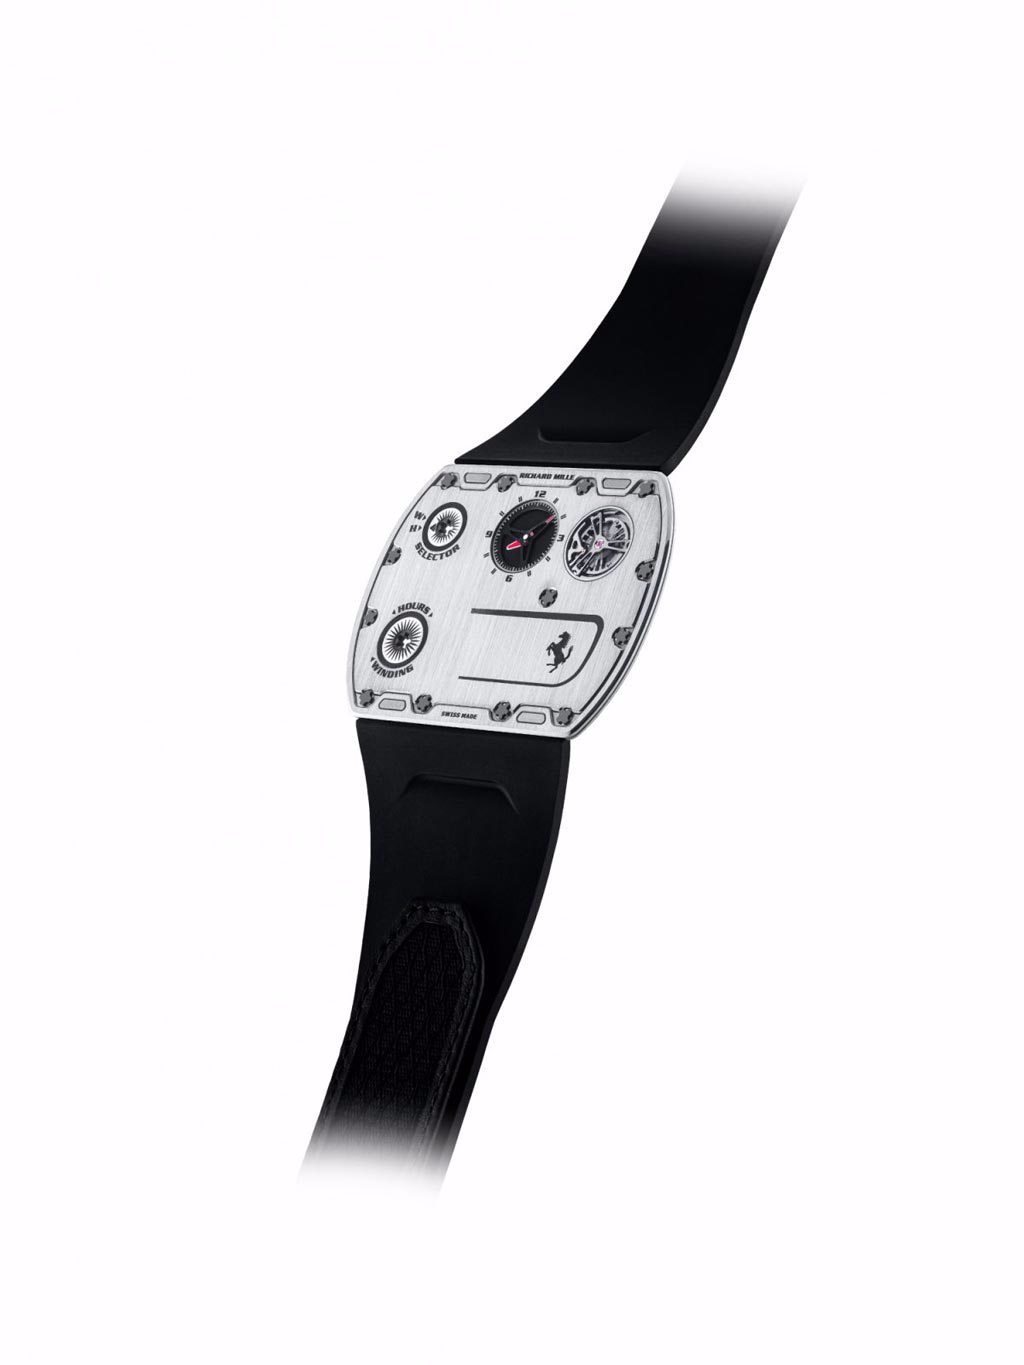  RM UP-01 Ferrari腕錶錶殼與機芯都極致纖薄。圖／Photo：RICHARD MILLE